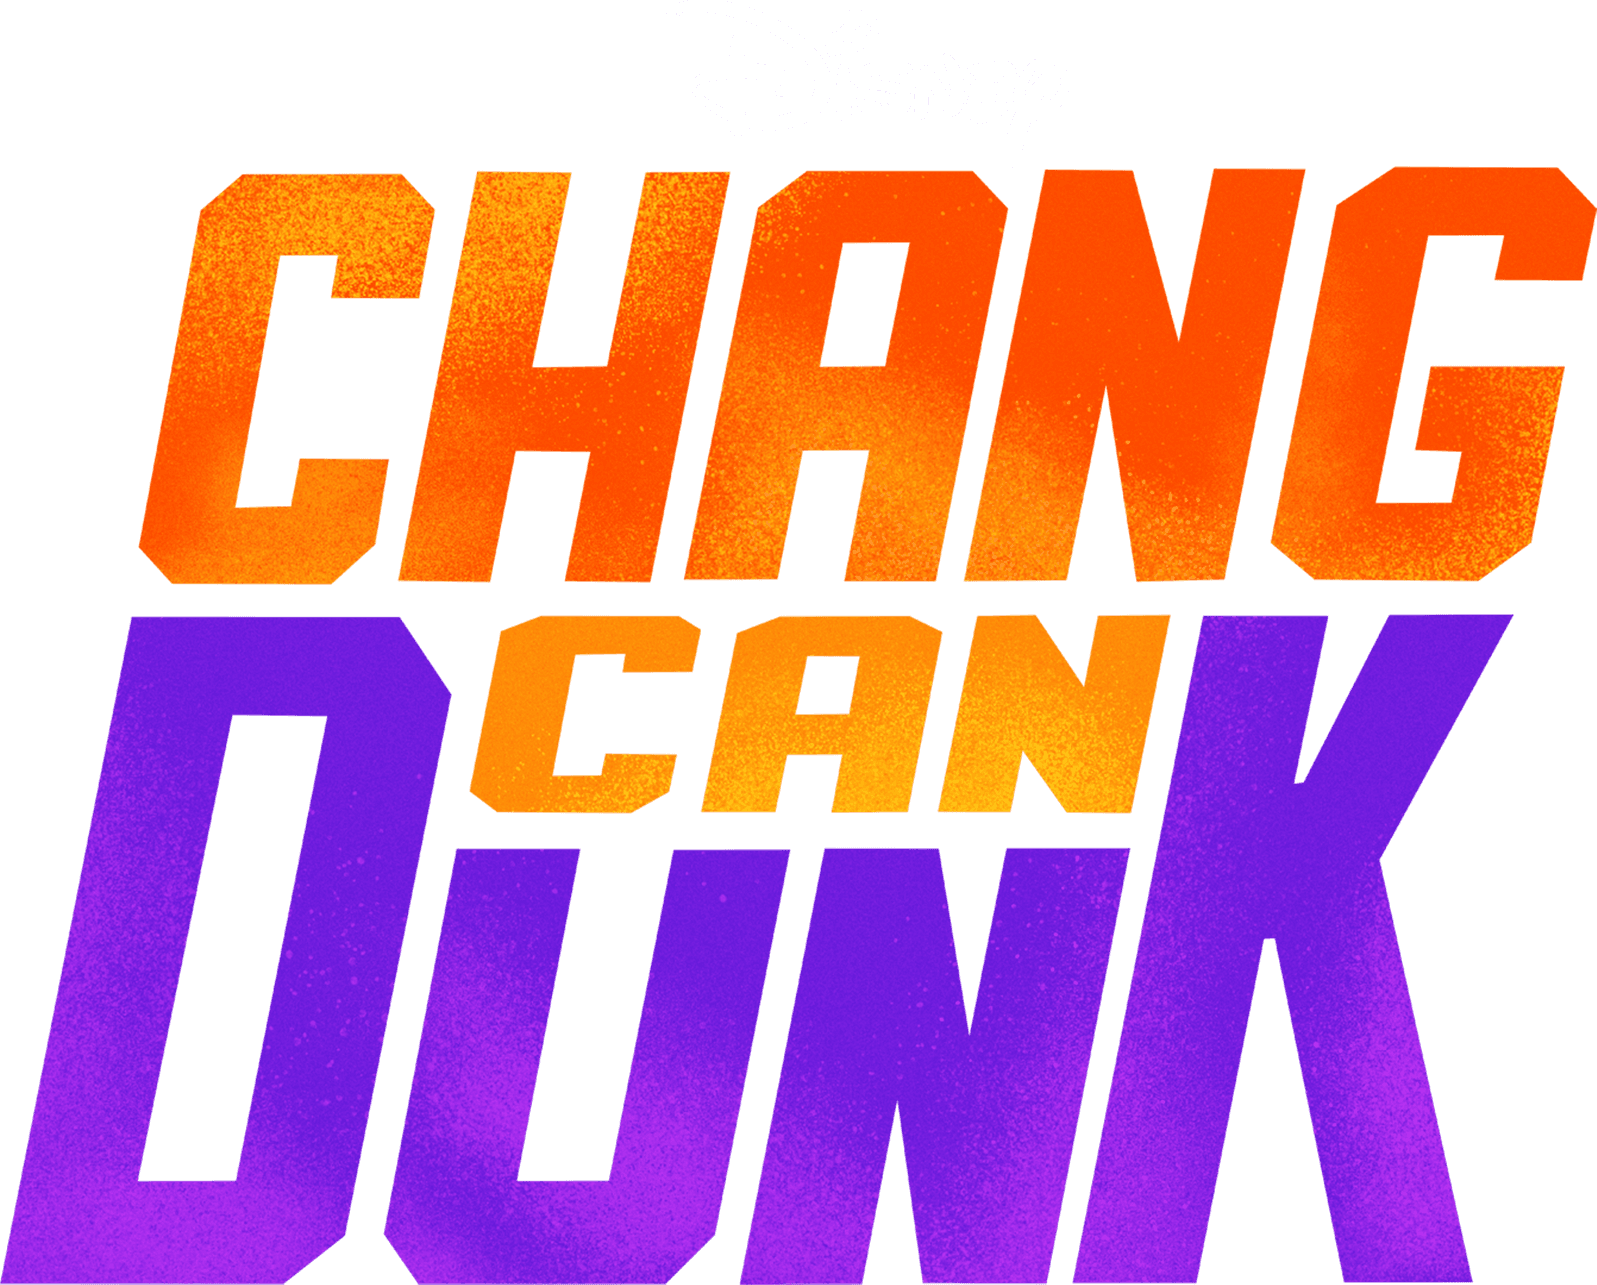 Chang Can Dunk logo